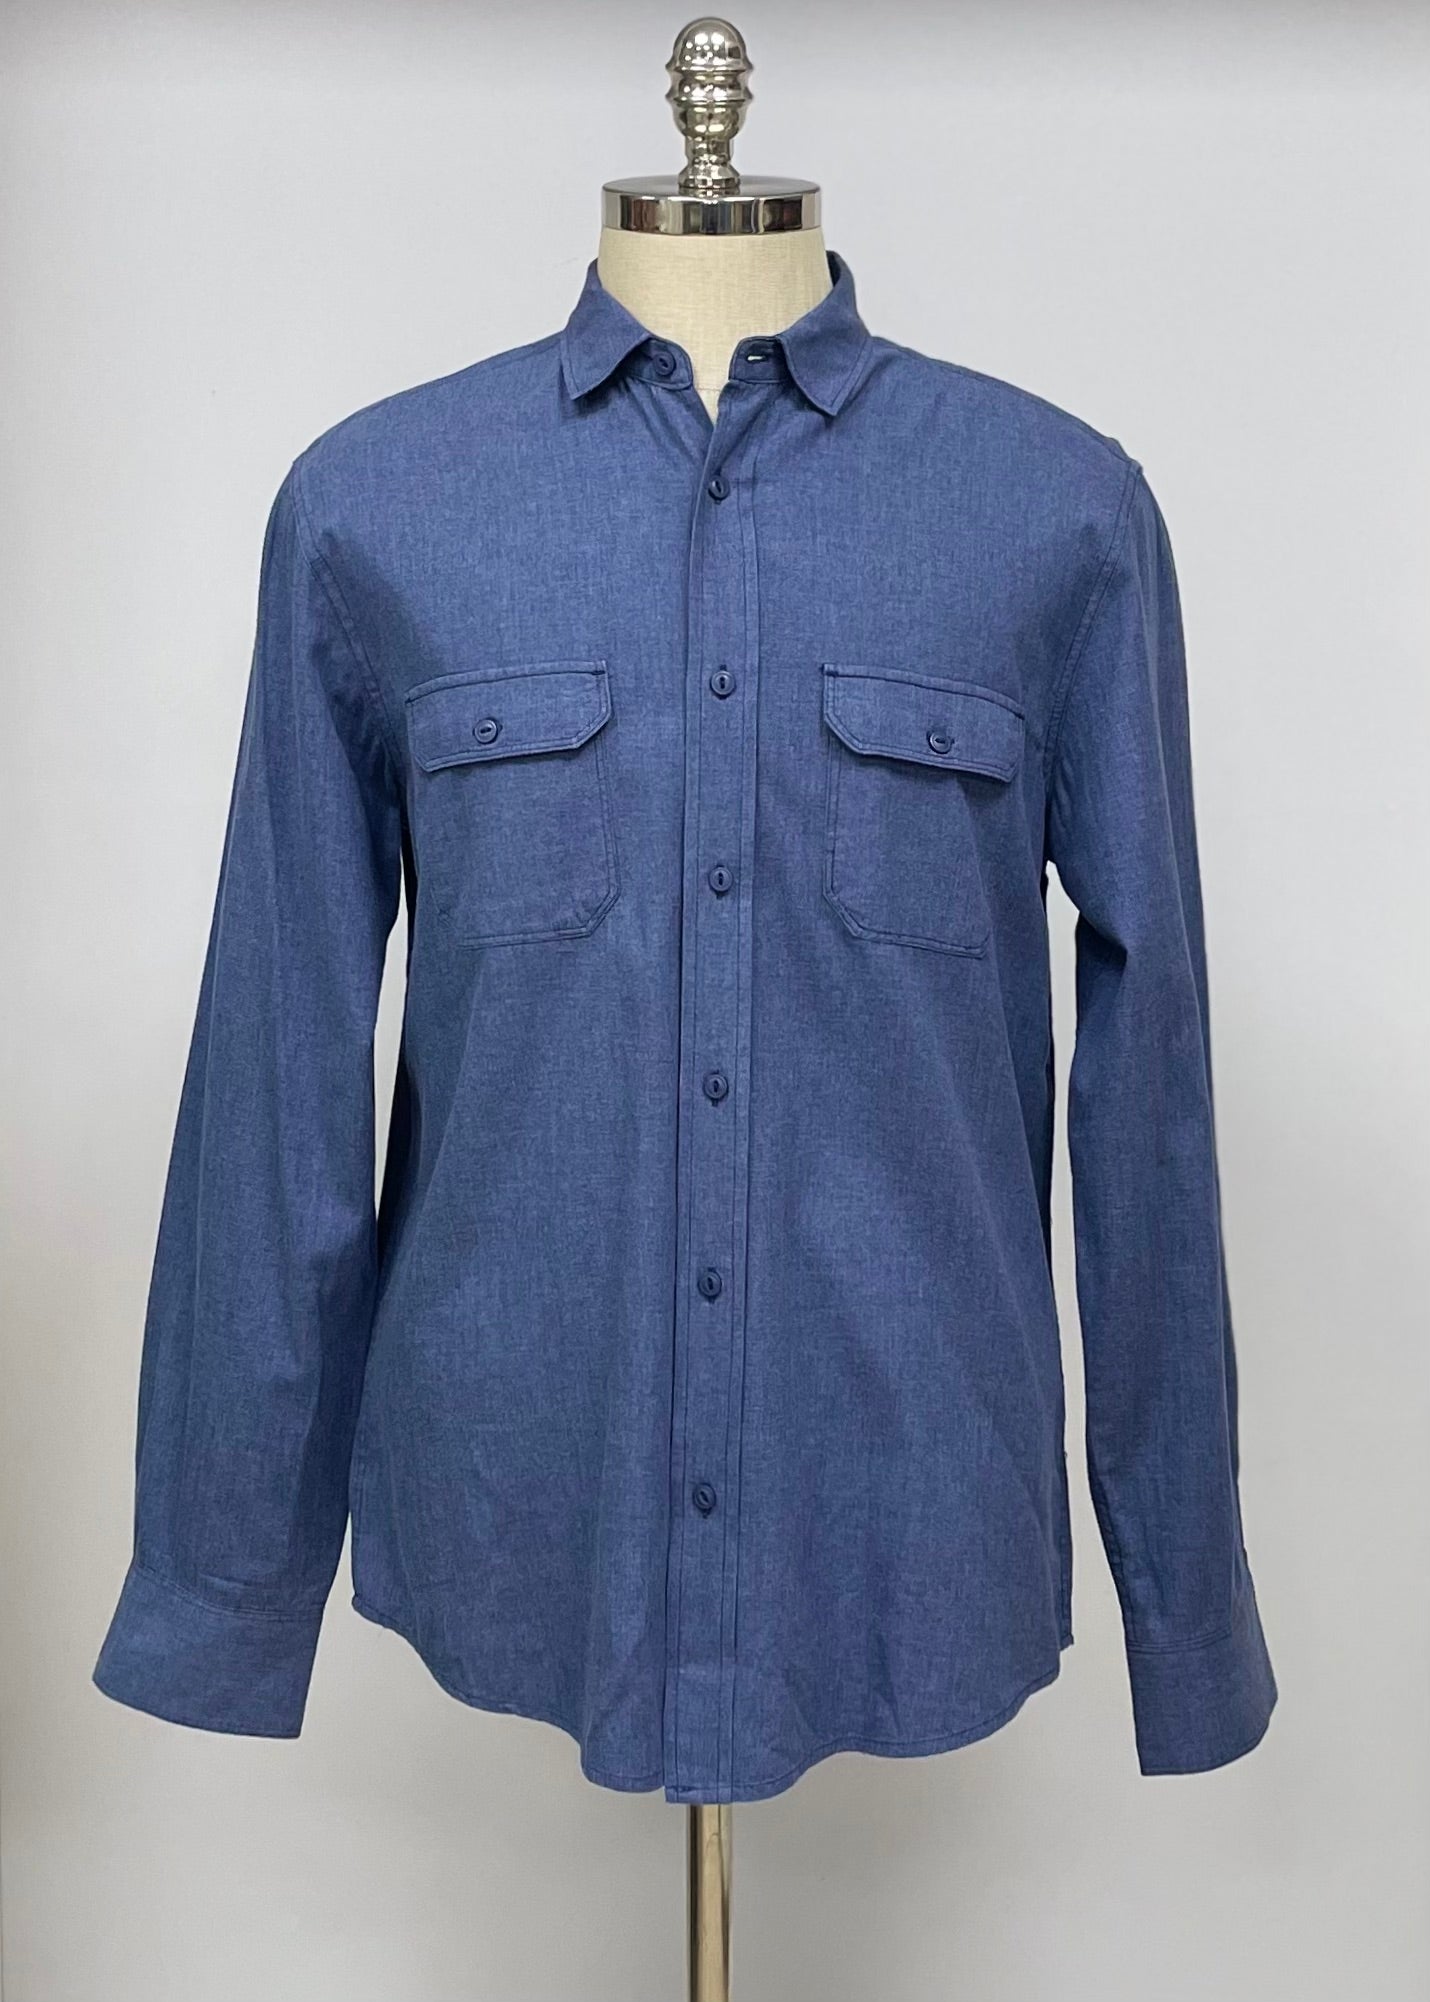 Camisa de botones Wallin & Bros 👑 Color azul grisáceo Talla M Entalle Regular